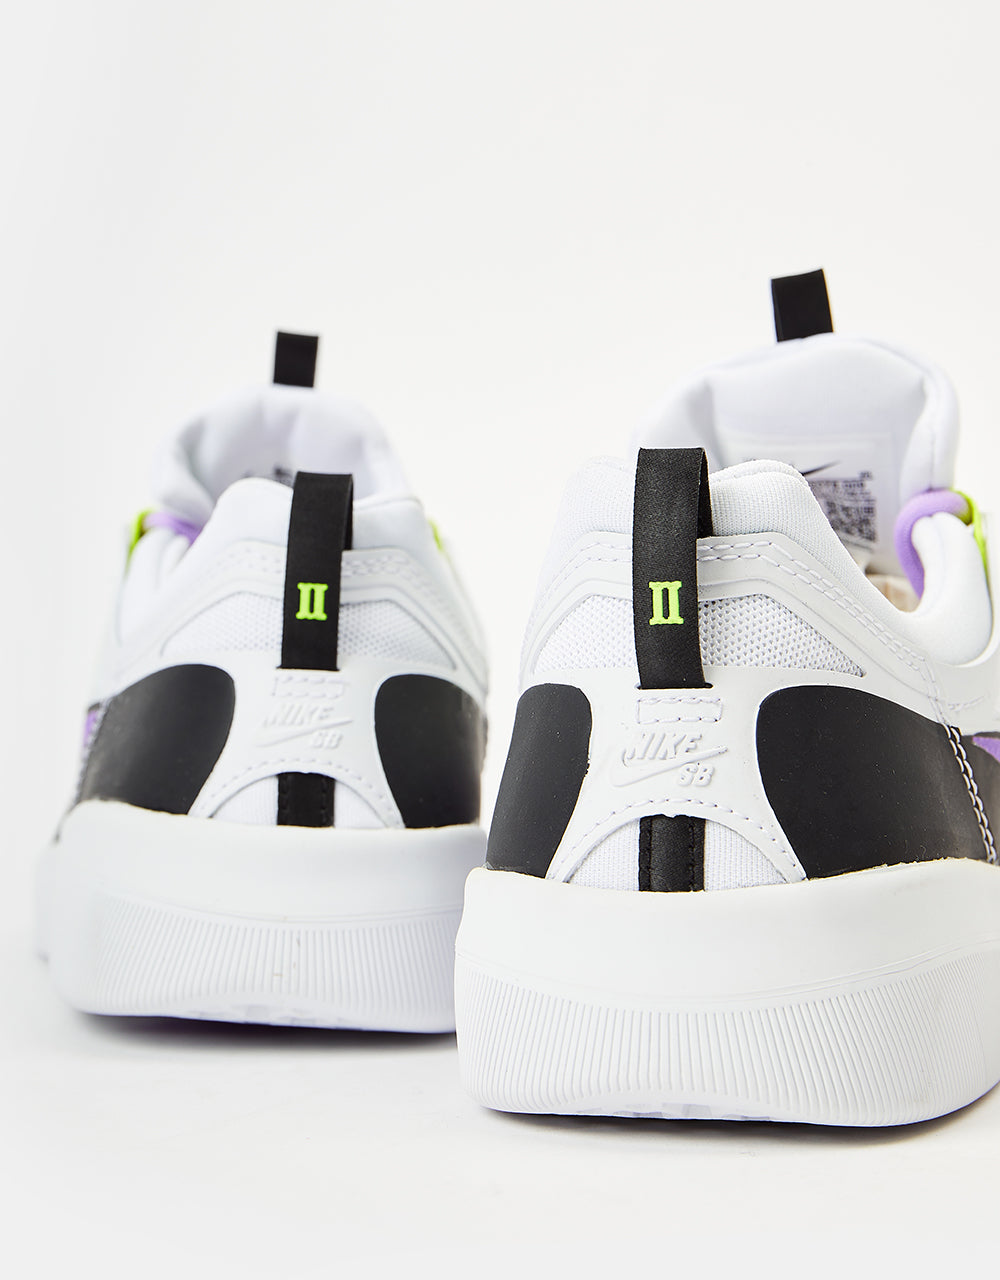 Nike SB Nyjah Free 2 Skate Shoes - Black/Wild Berry-White-Lilac